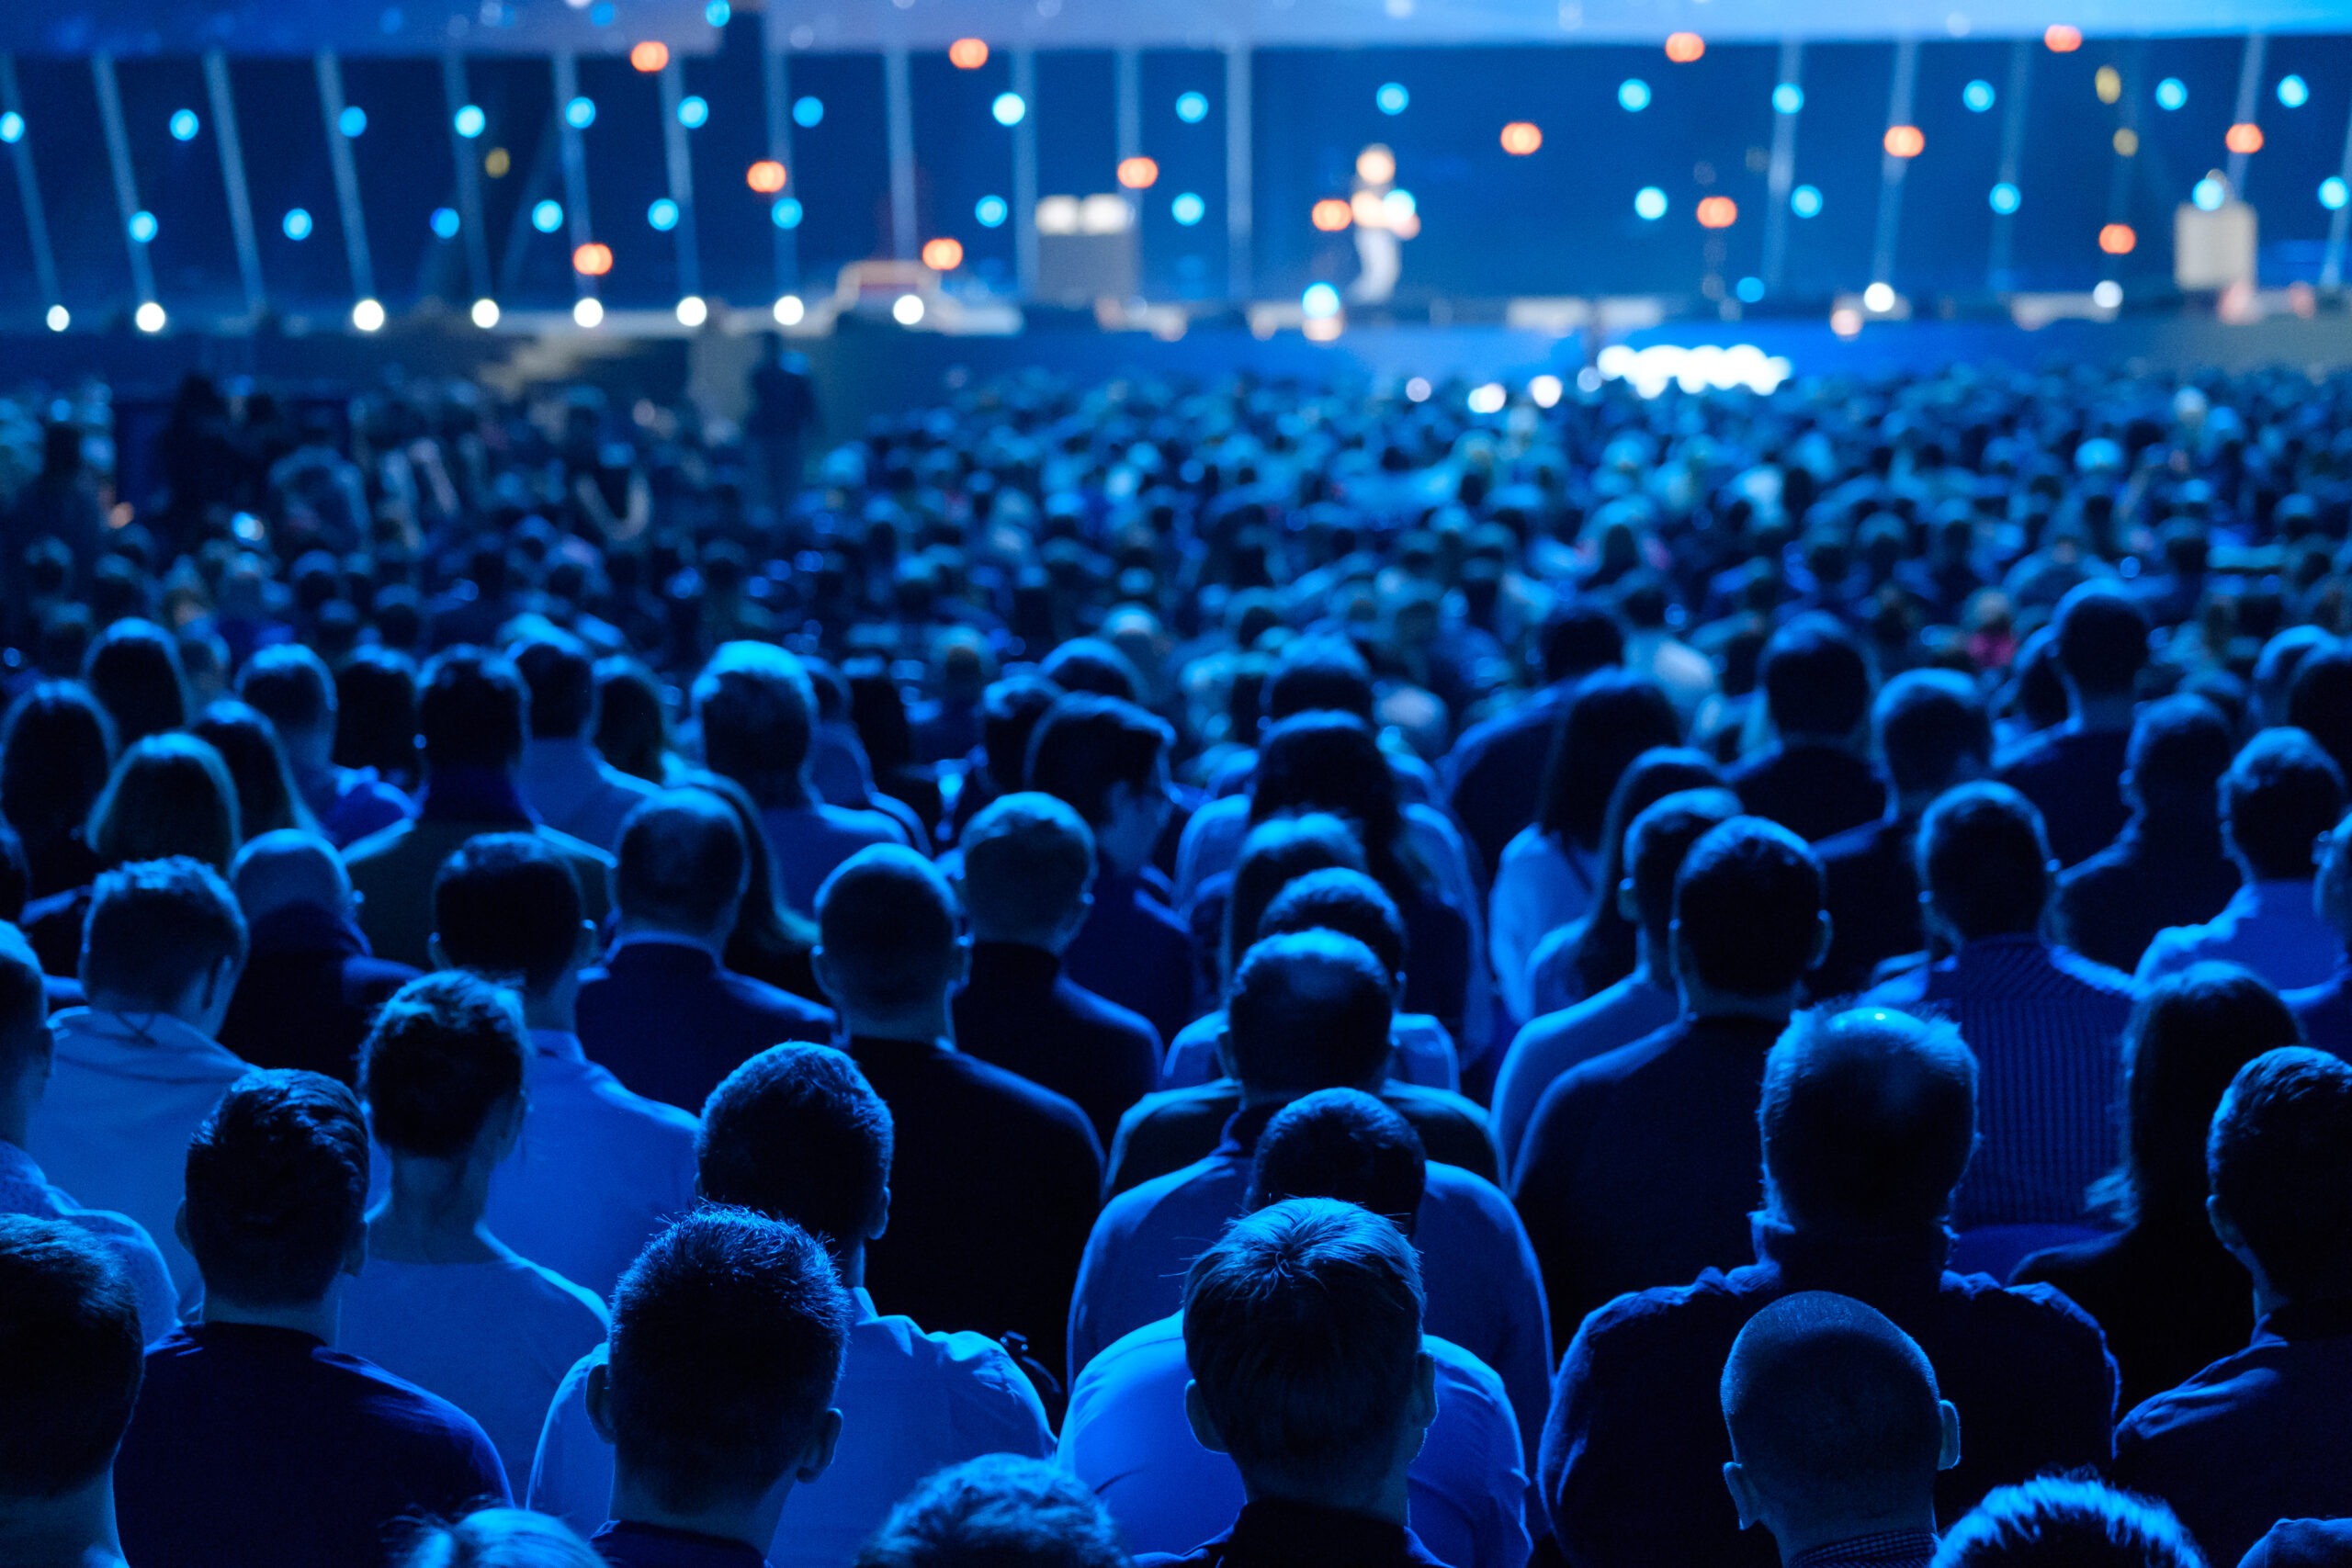 Image of crowd under blue light